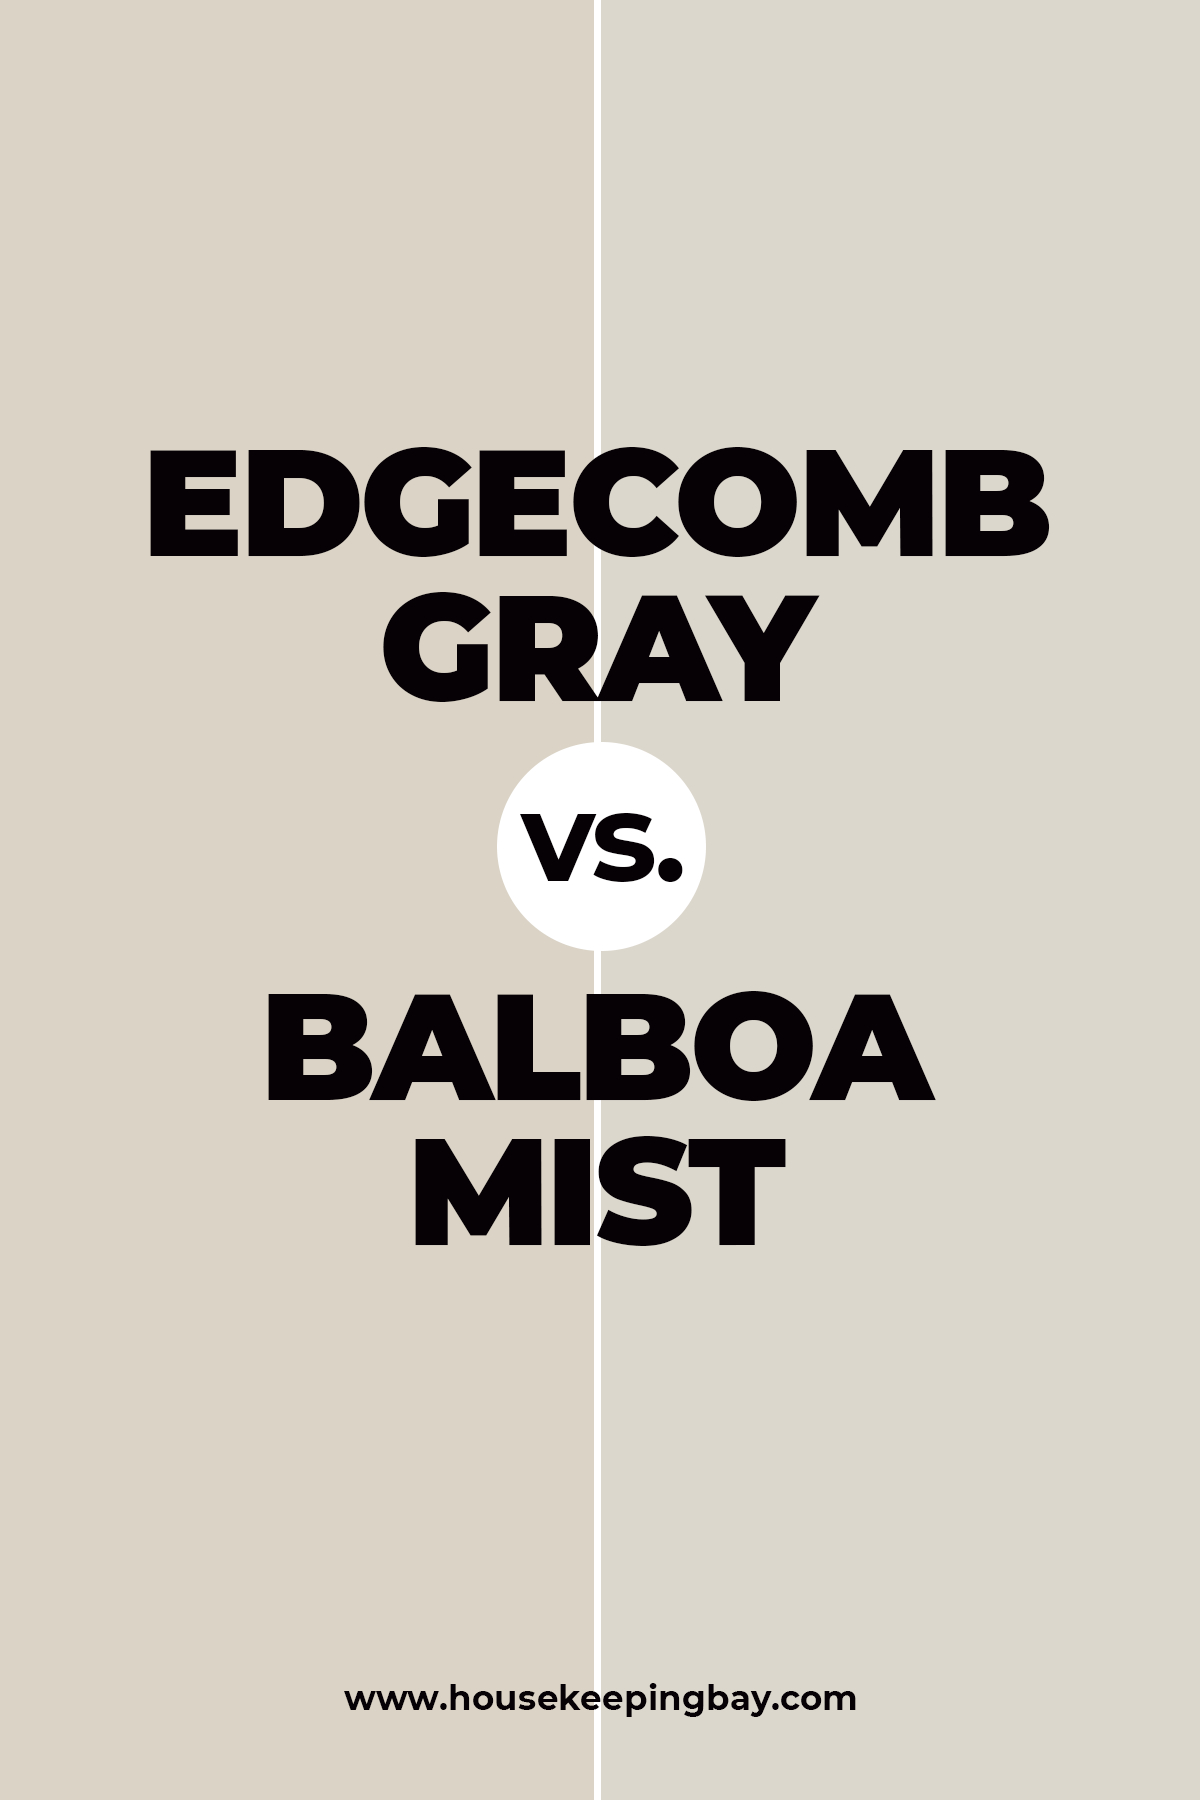 Edgecomb Gray vs. Balboa Mist